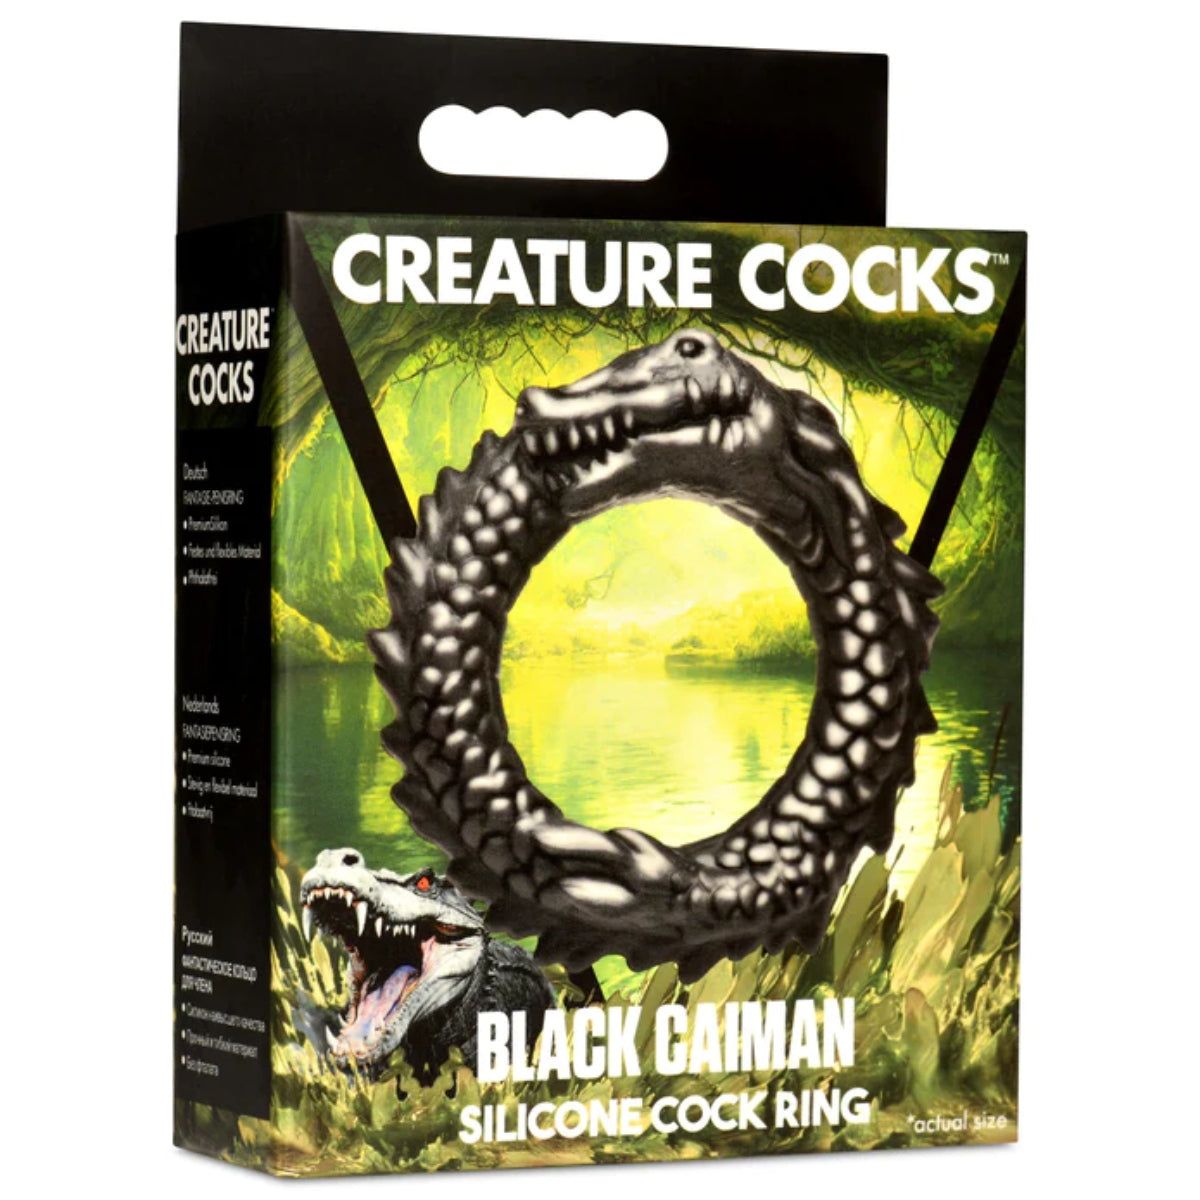 Black Caiman Silicone Cock Ring | Creature Cocks